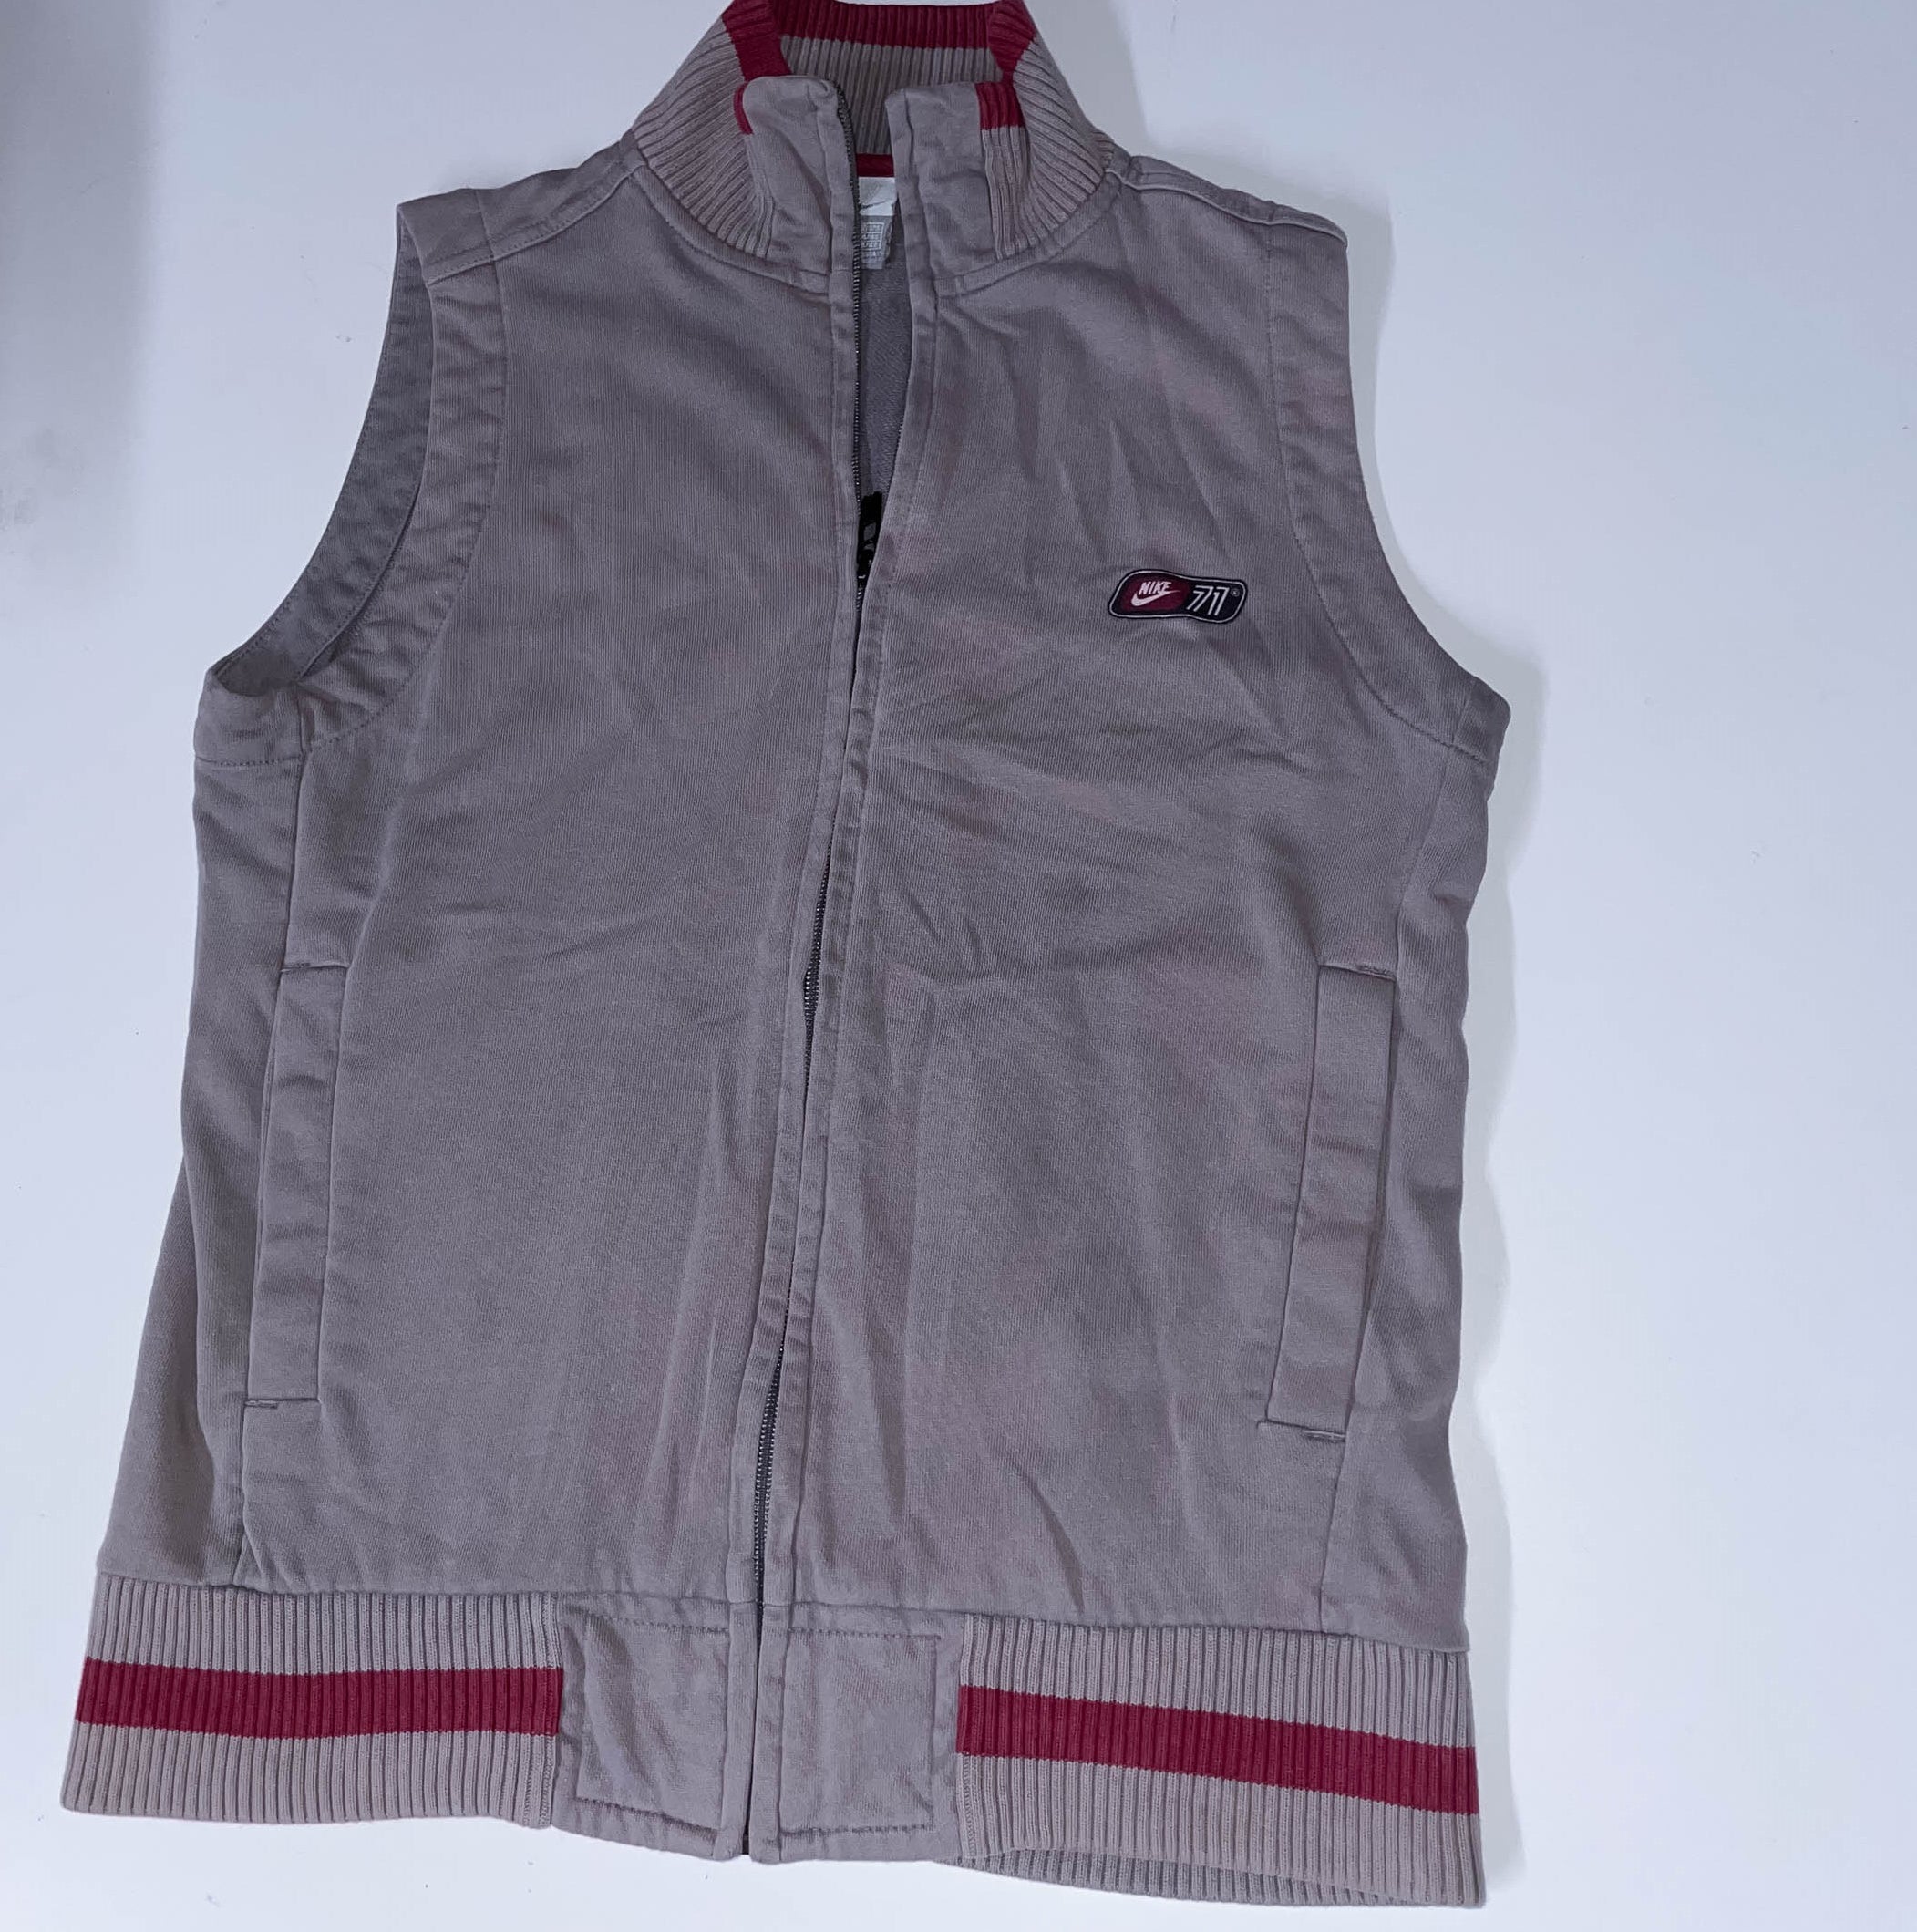 Vintage Nike cream Fleece Gilet sleeveless full zip up small jacket